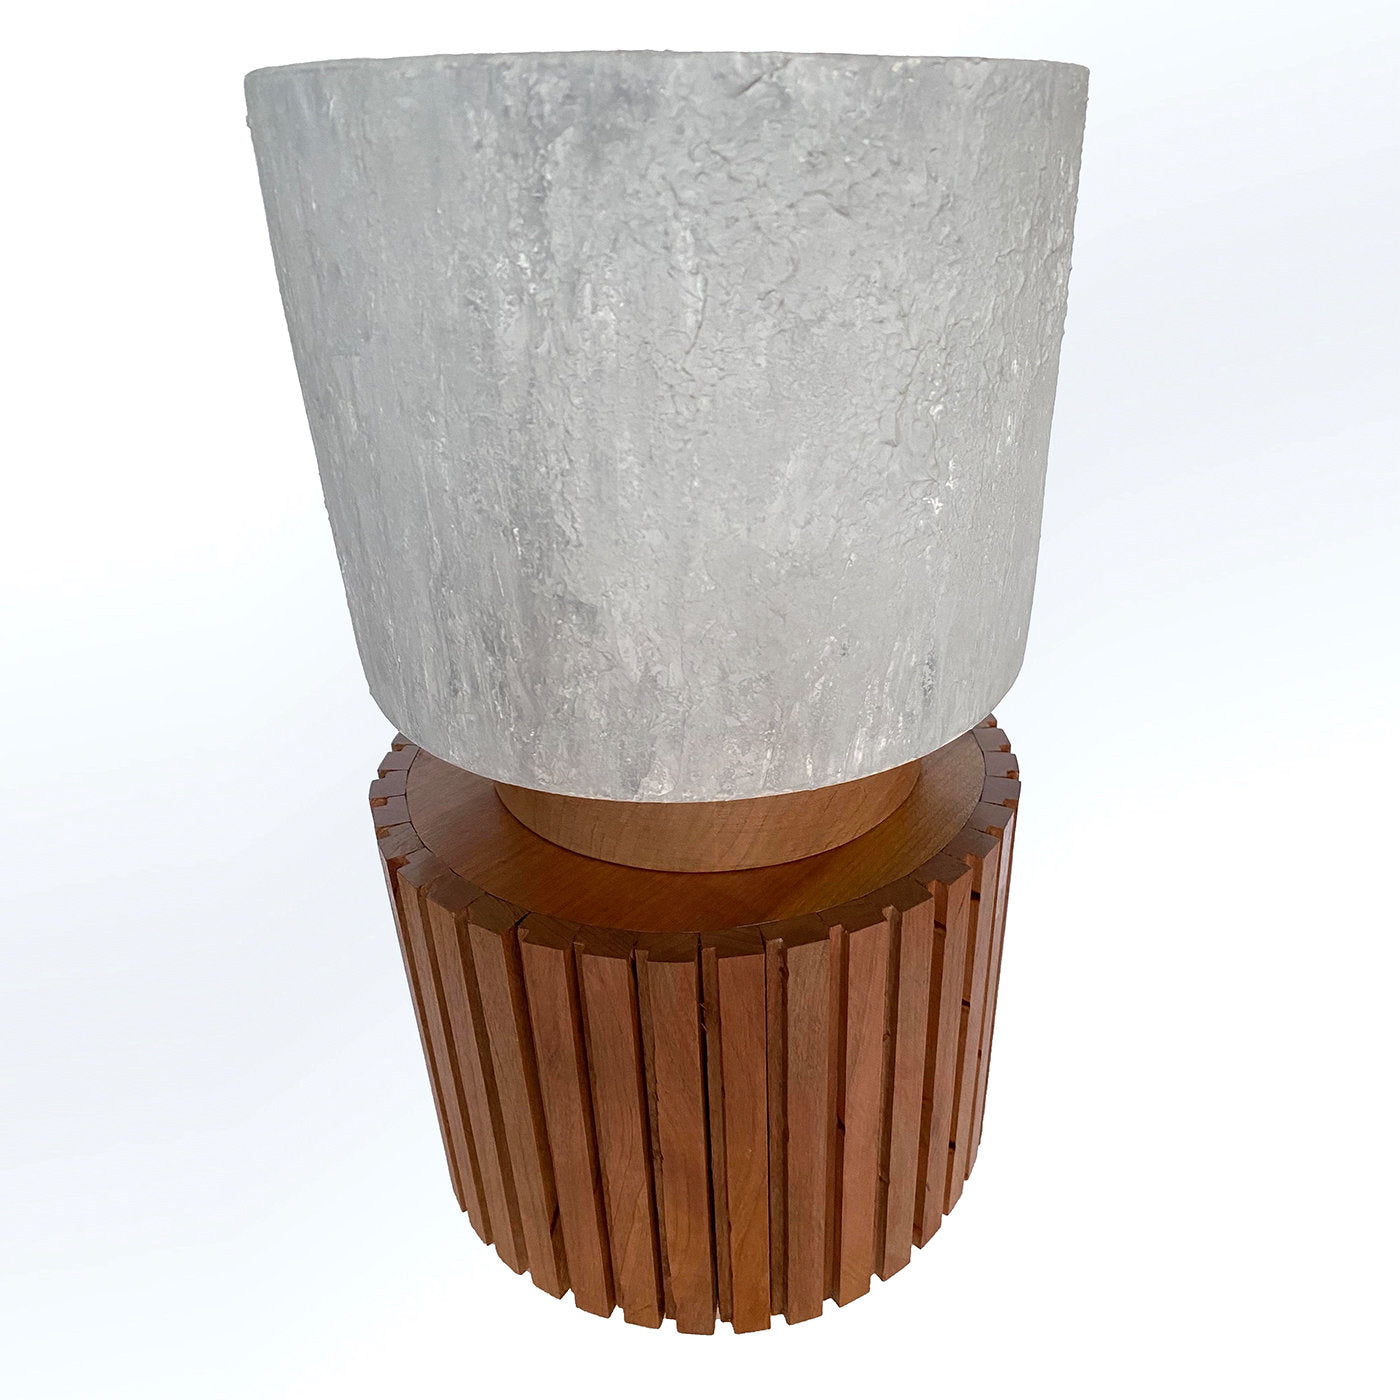 Totem Table Lamp by Mascia Meccani #4 - Alternative view 4